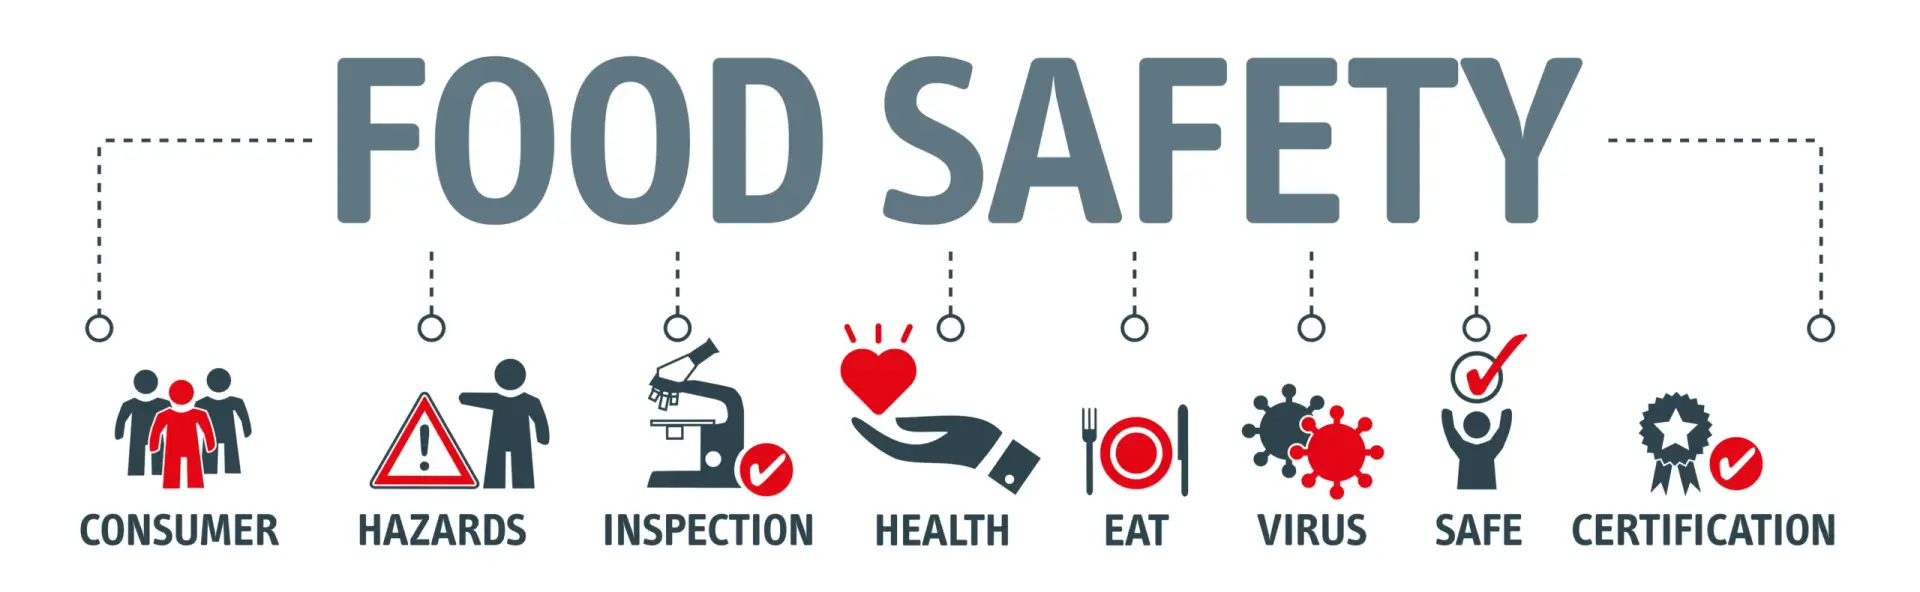 Food safety banner